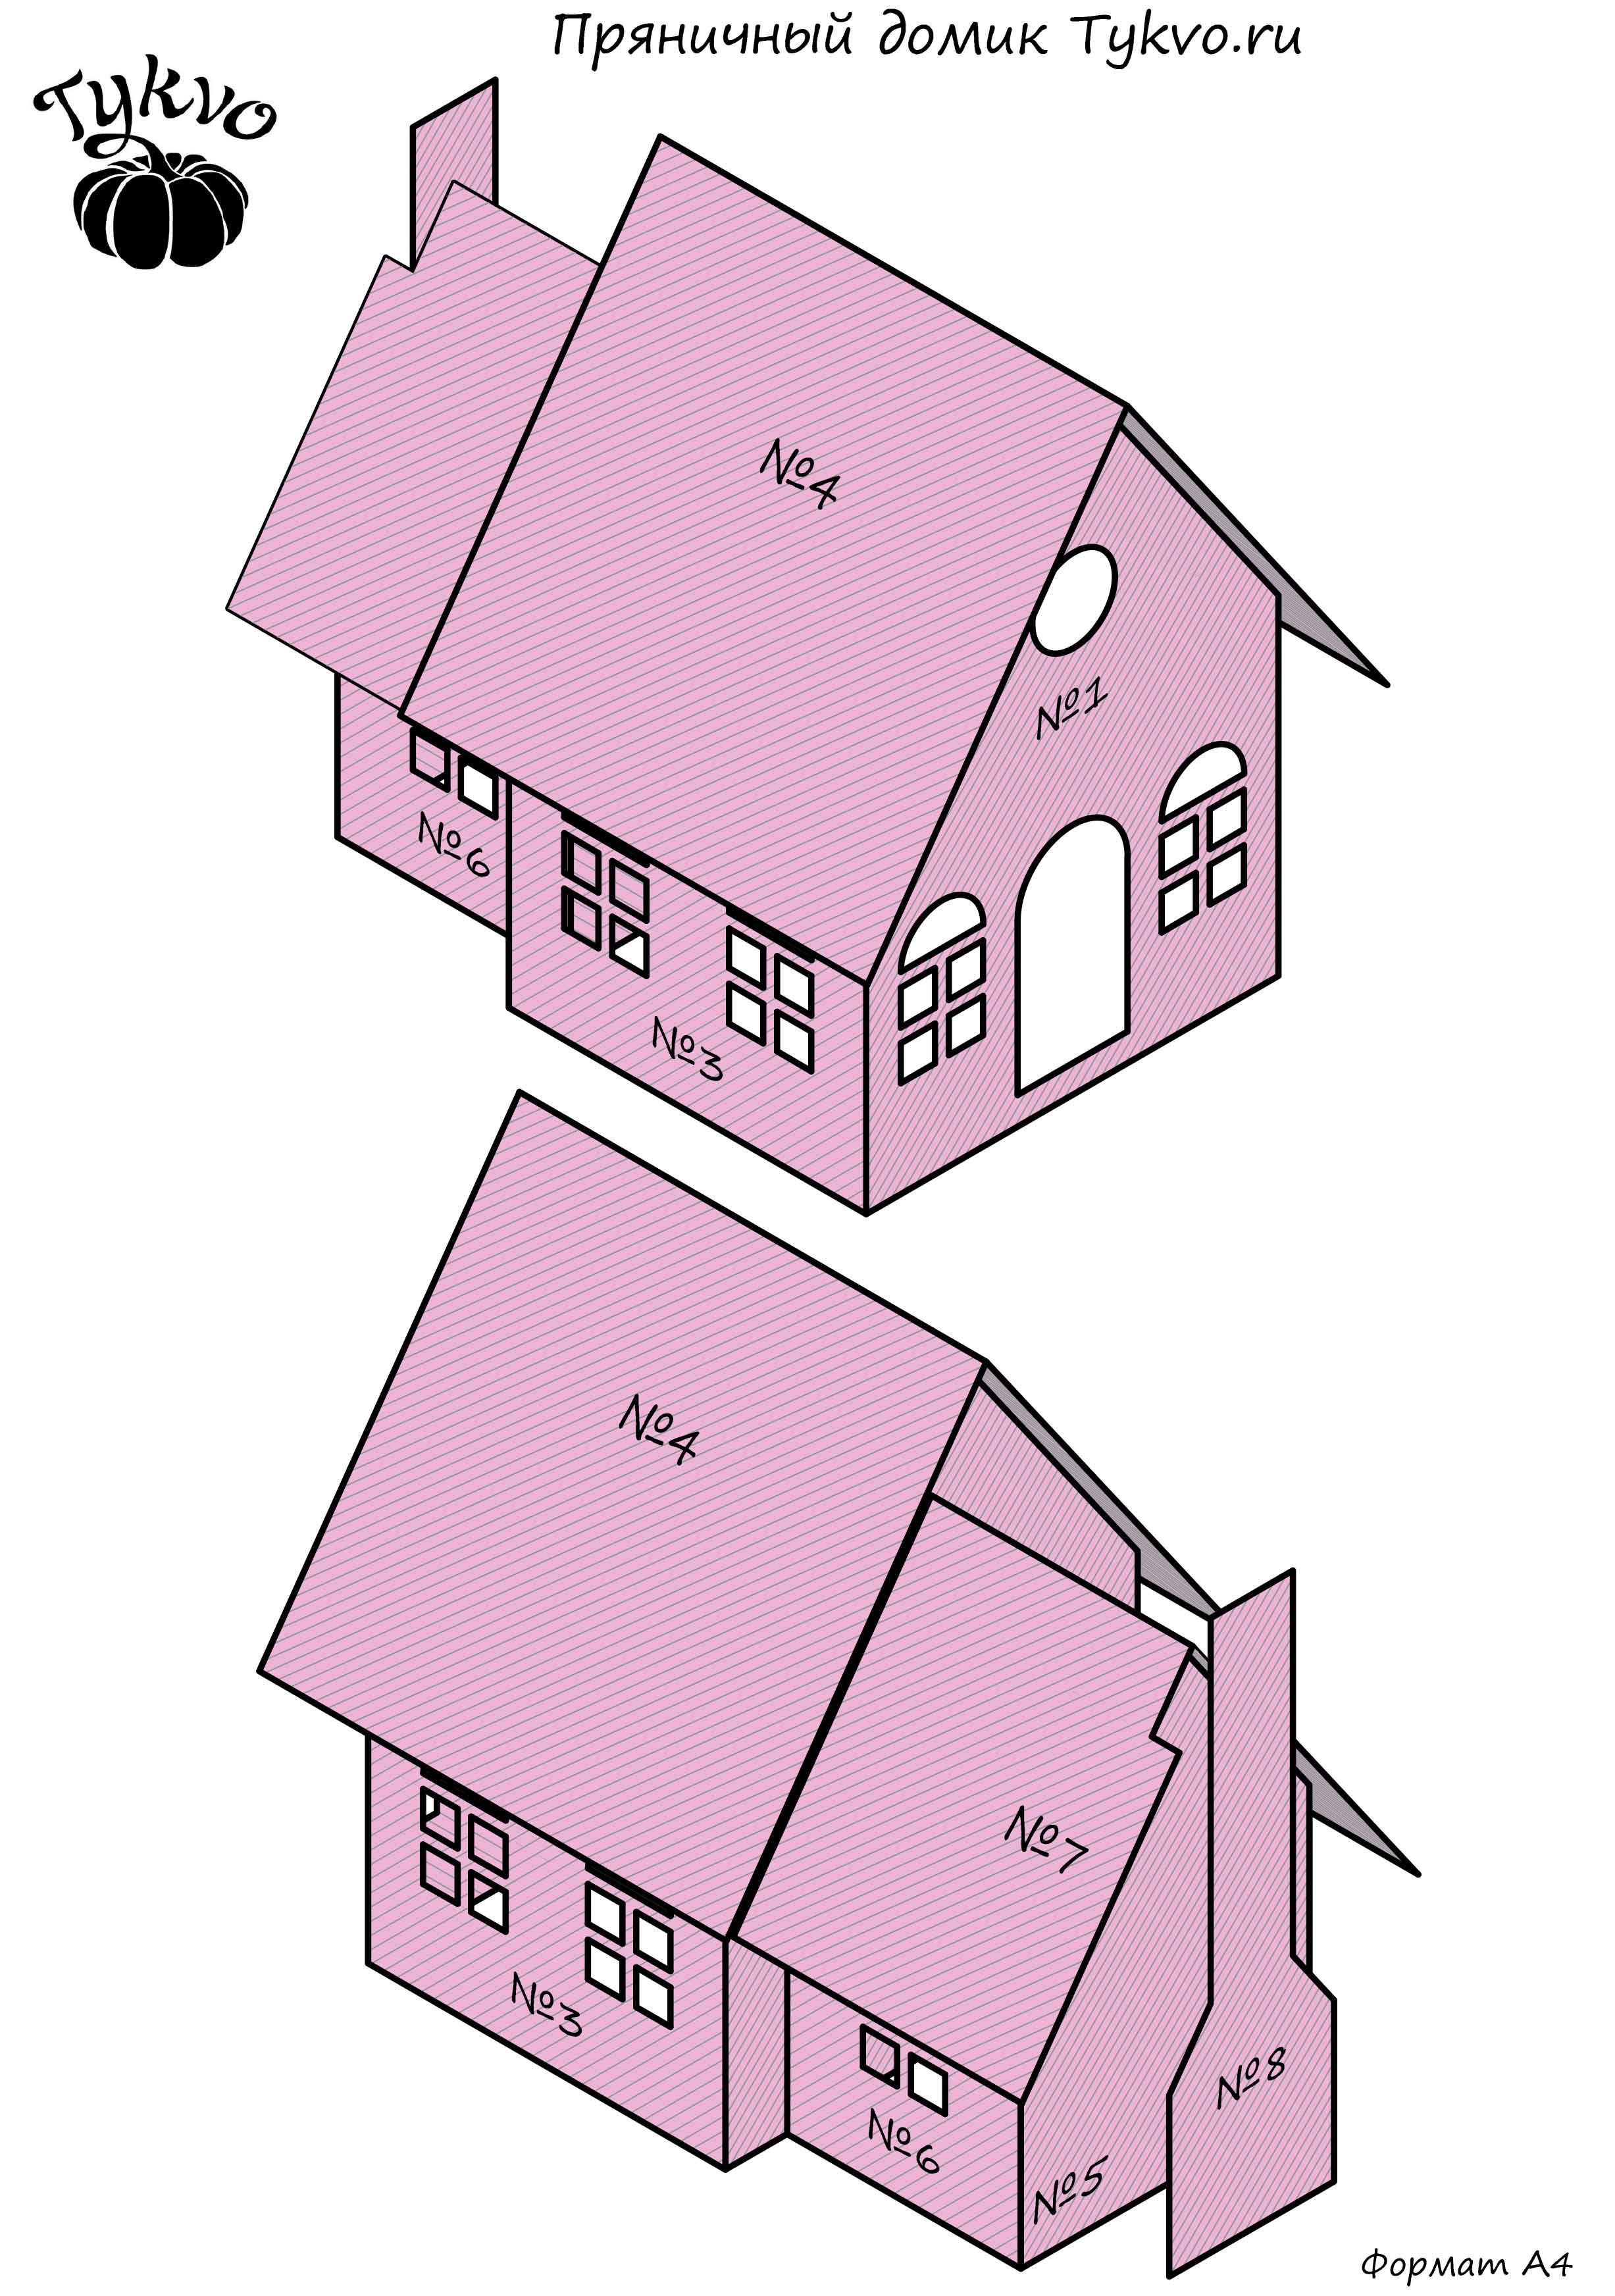 Сборочный чертеж пряничного домика